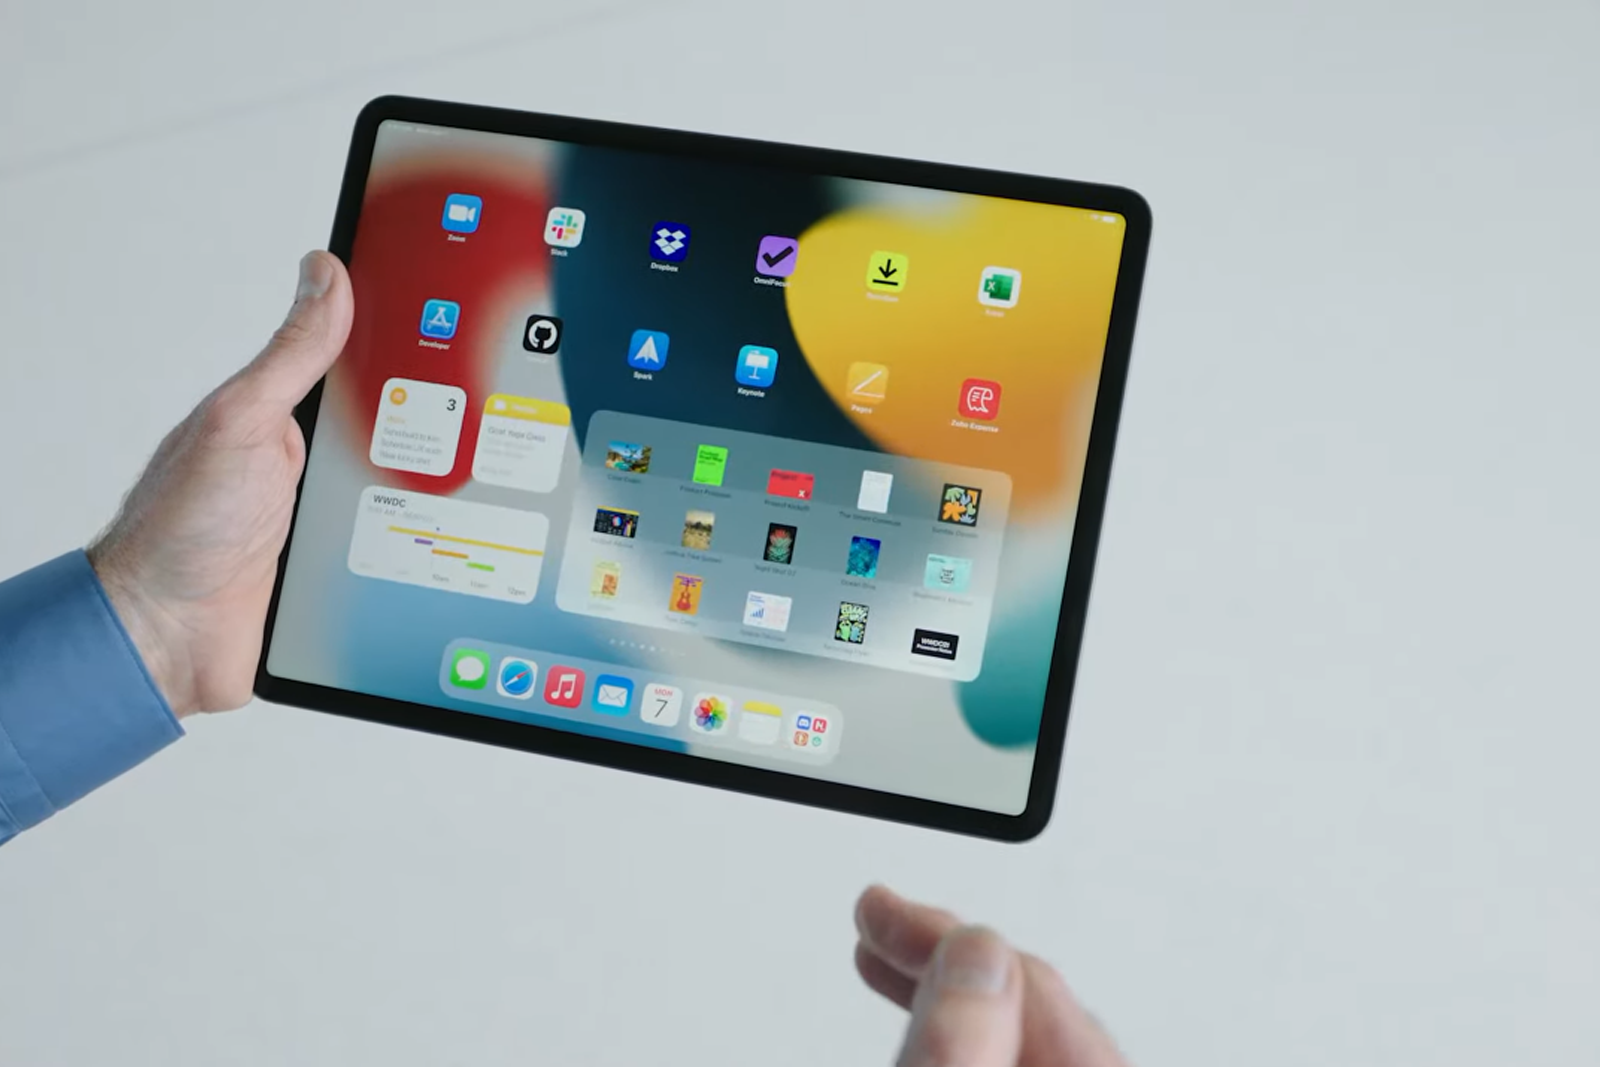 iPadOS 15 will bring widgets and app library to iPad at last